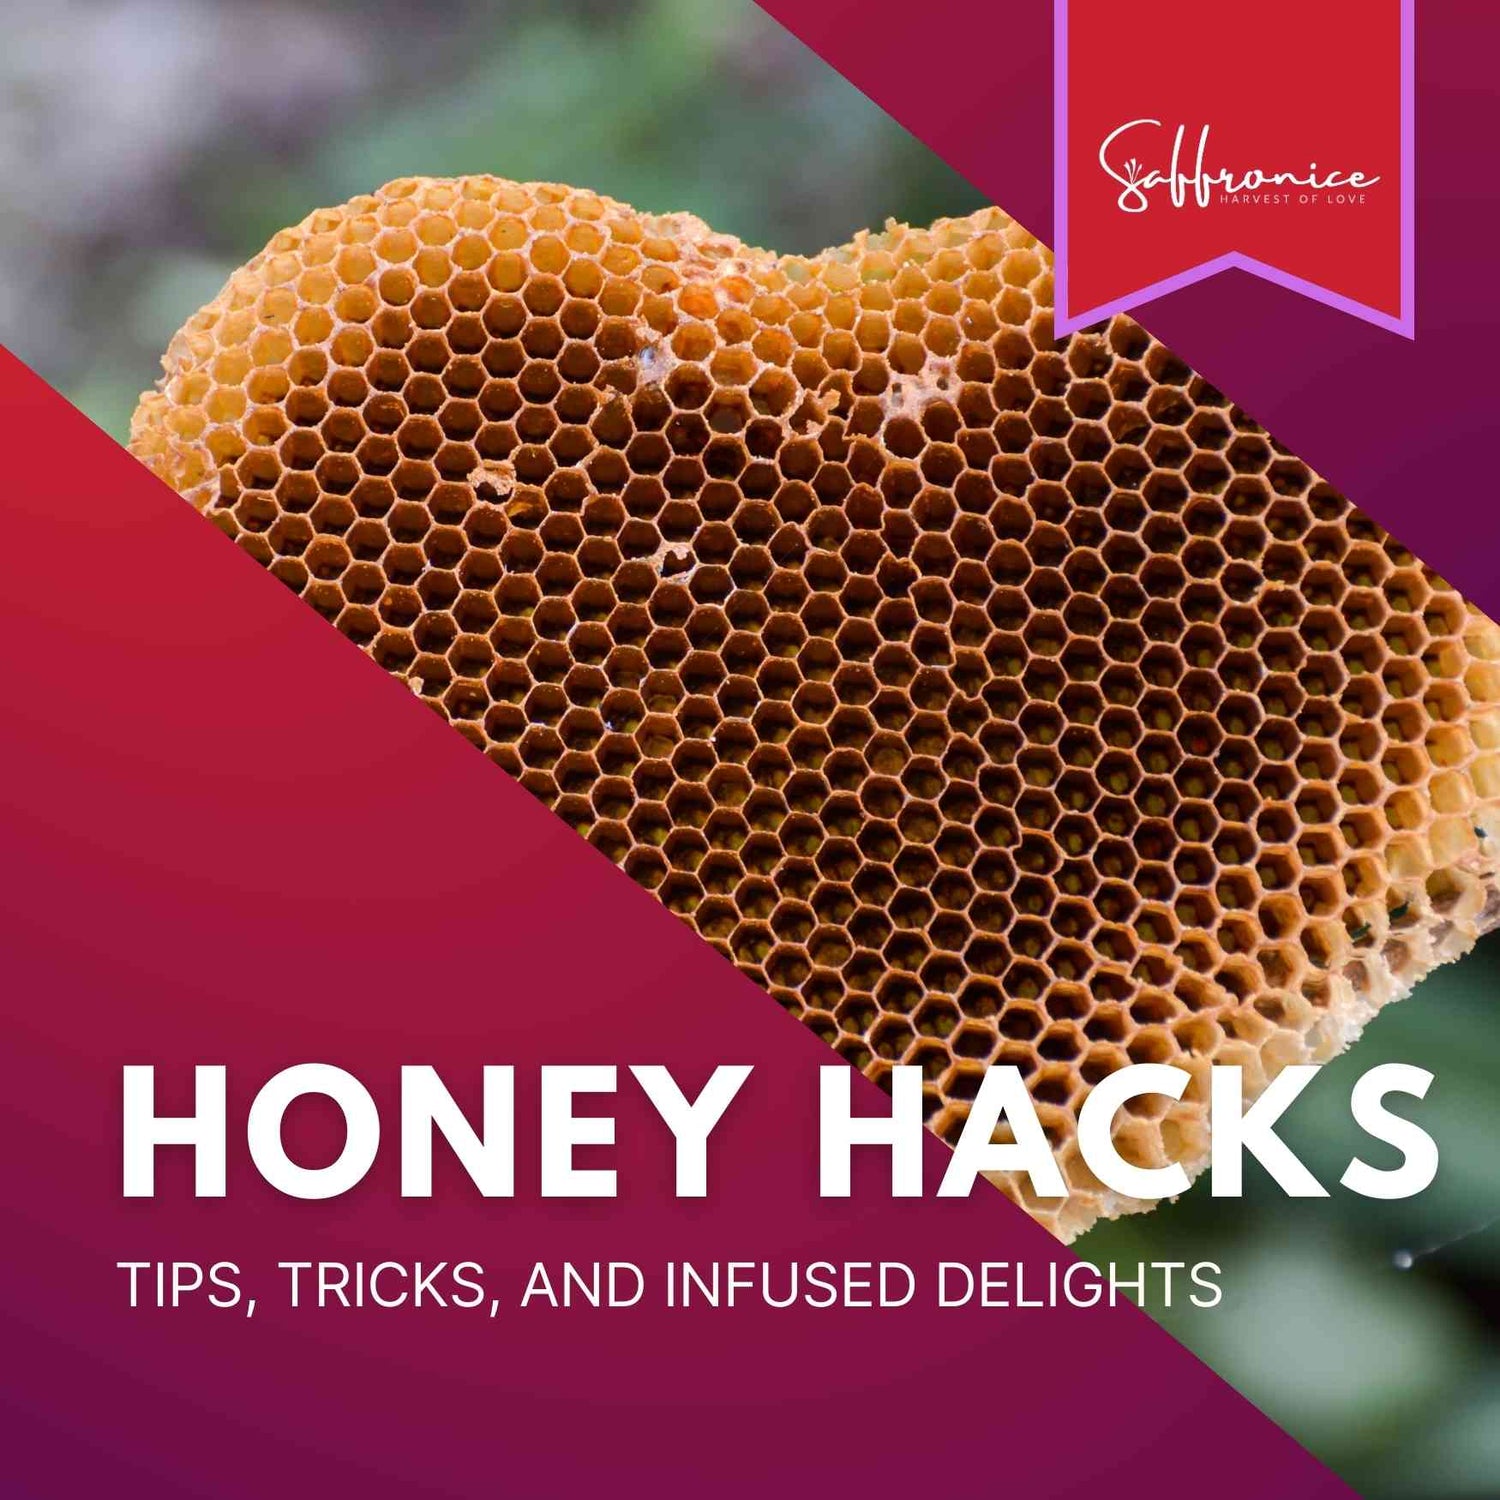 Honey hacks